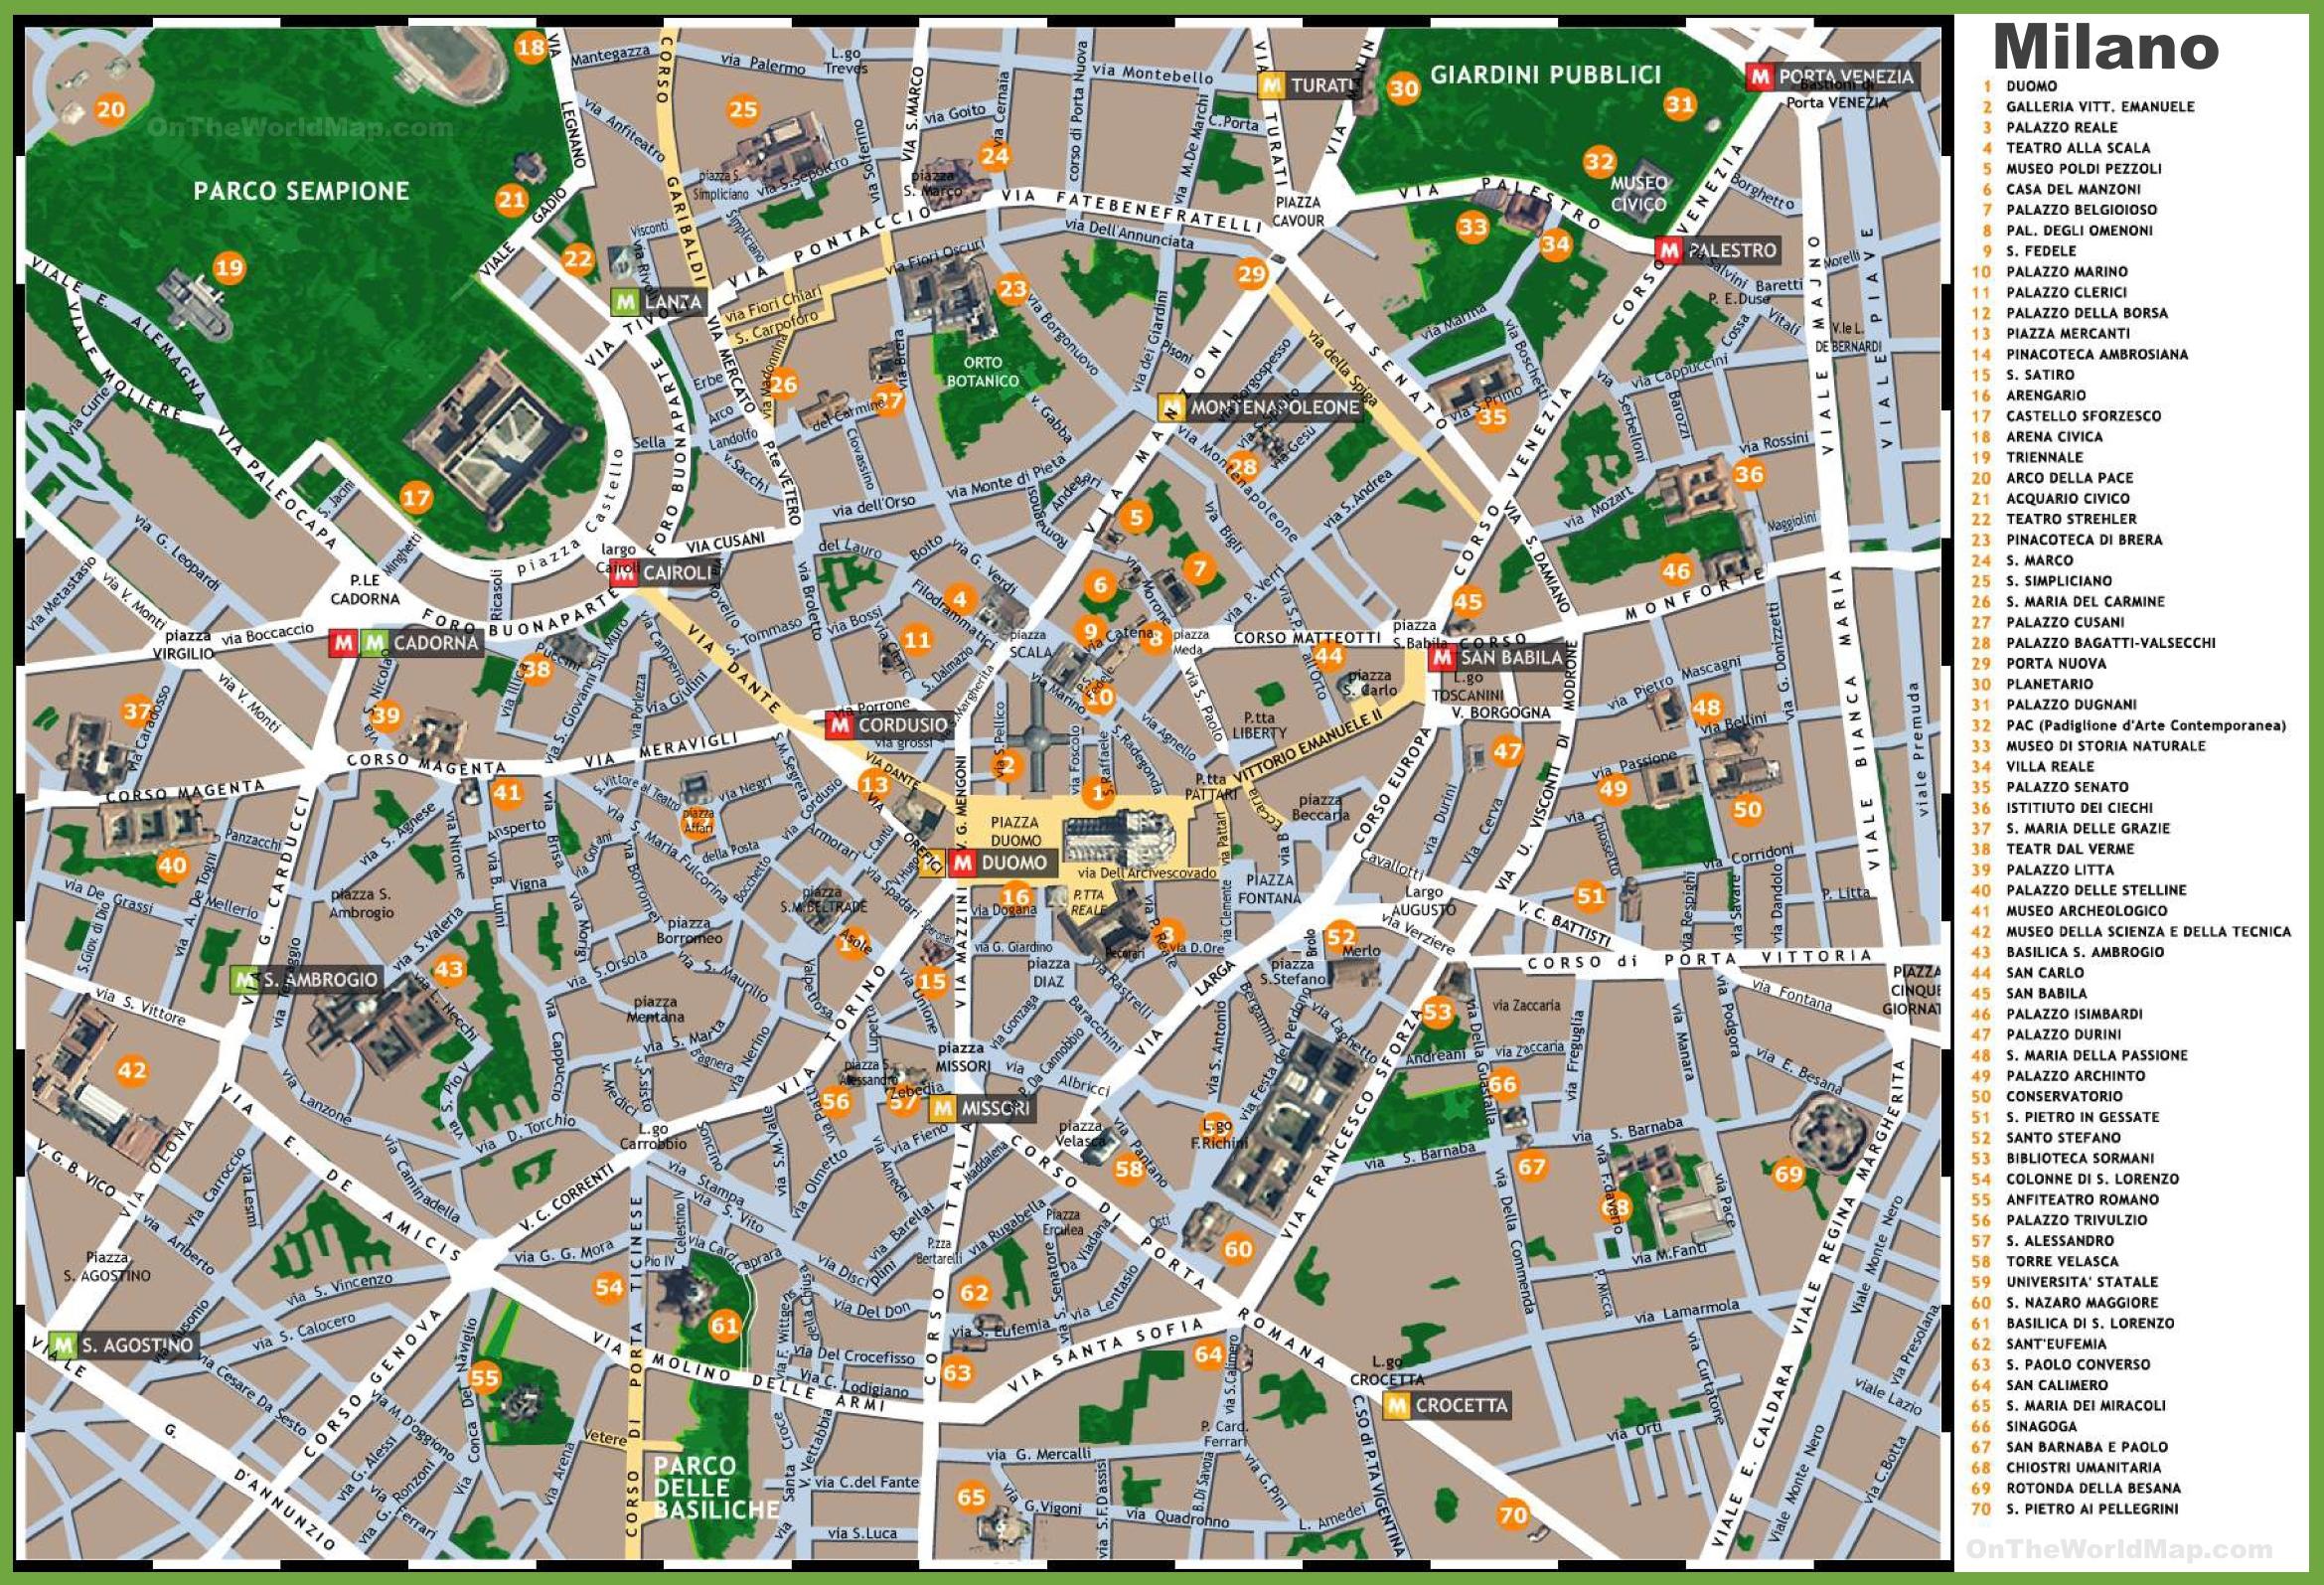 milan italy tourist map